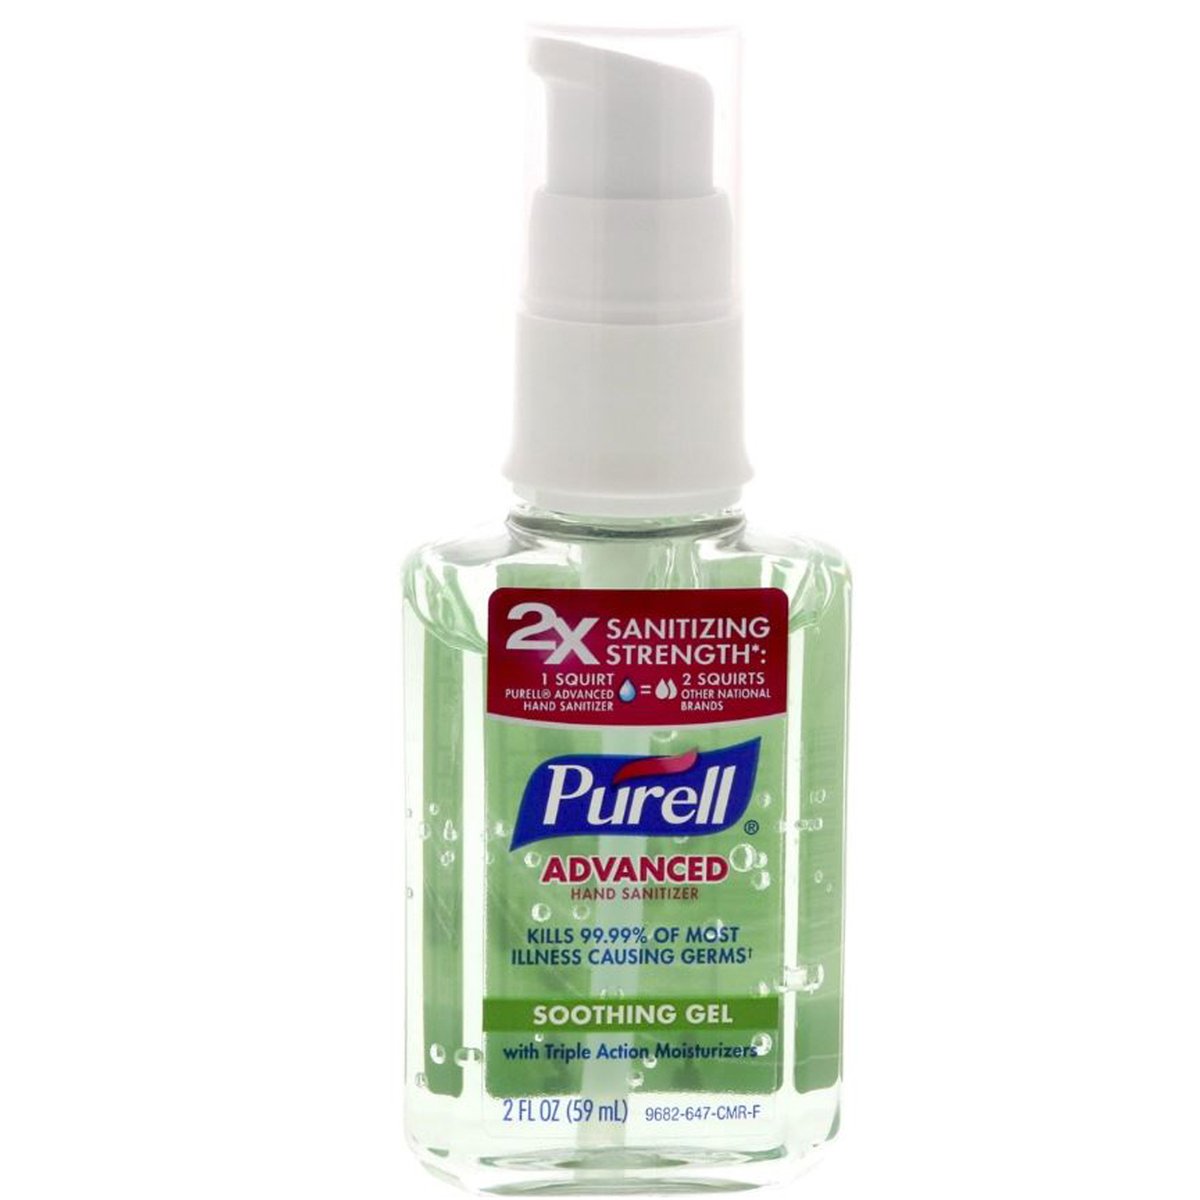 Purell Advanced Hand Sanitizer Refreshing Soothing Gel 59 ml